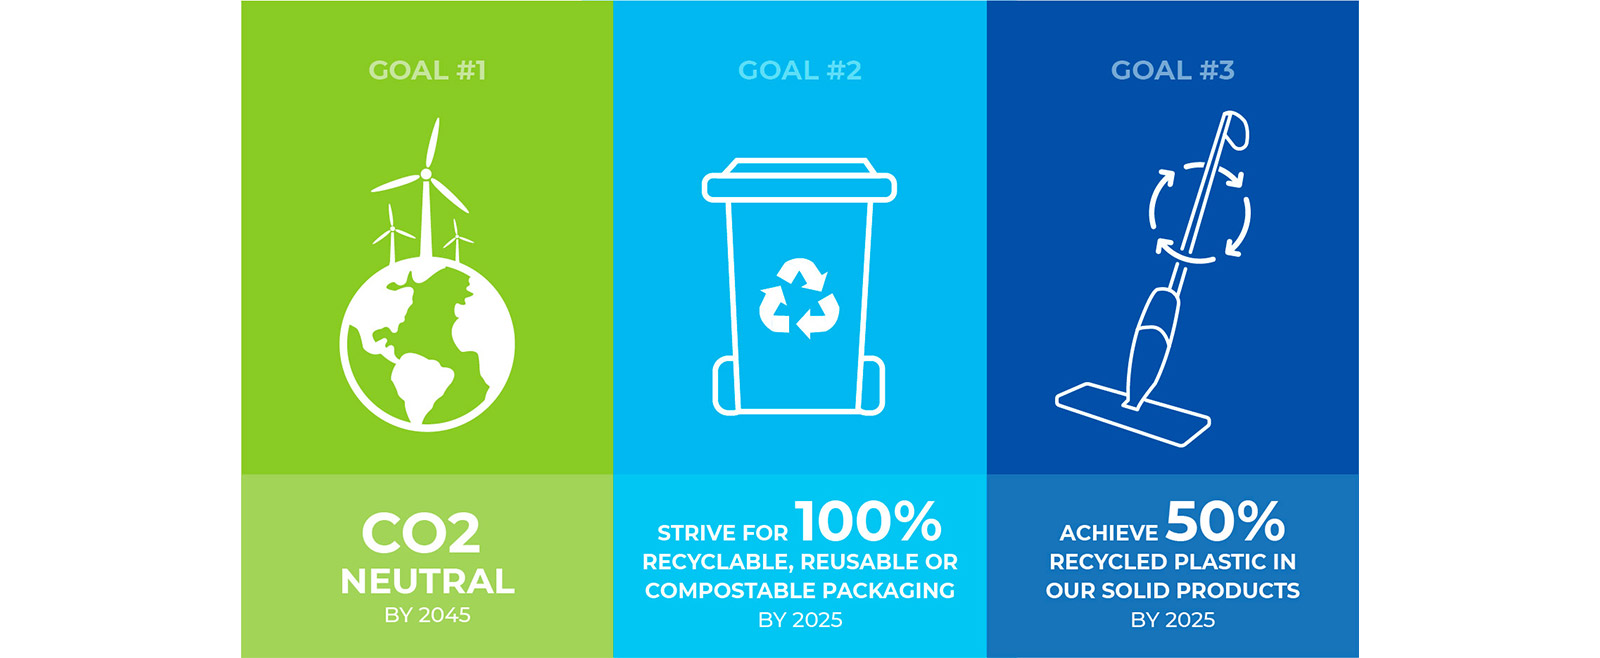 CA_sustainability_Infographic_goals_image.jpg